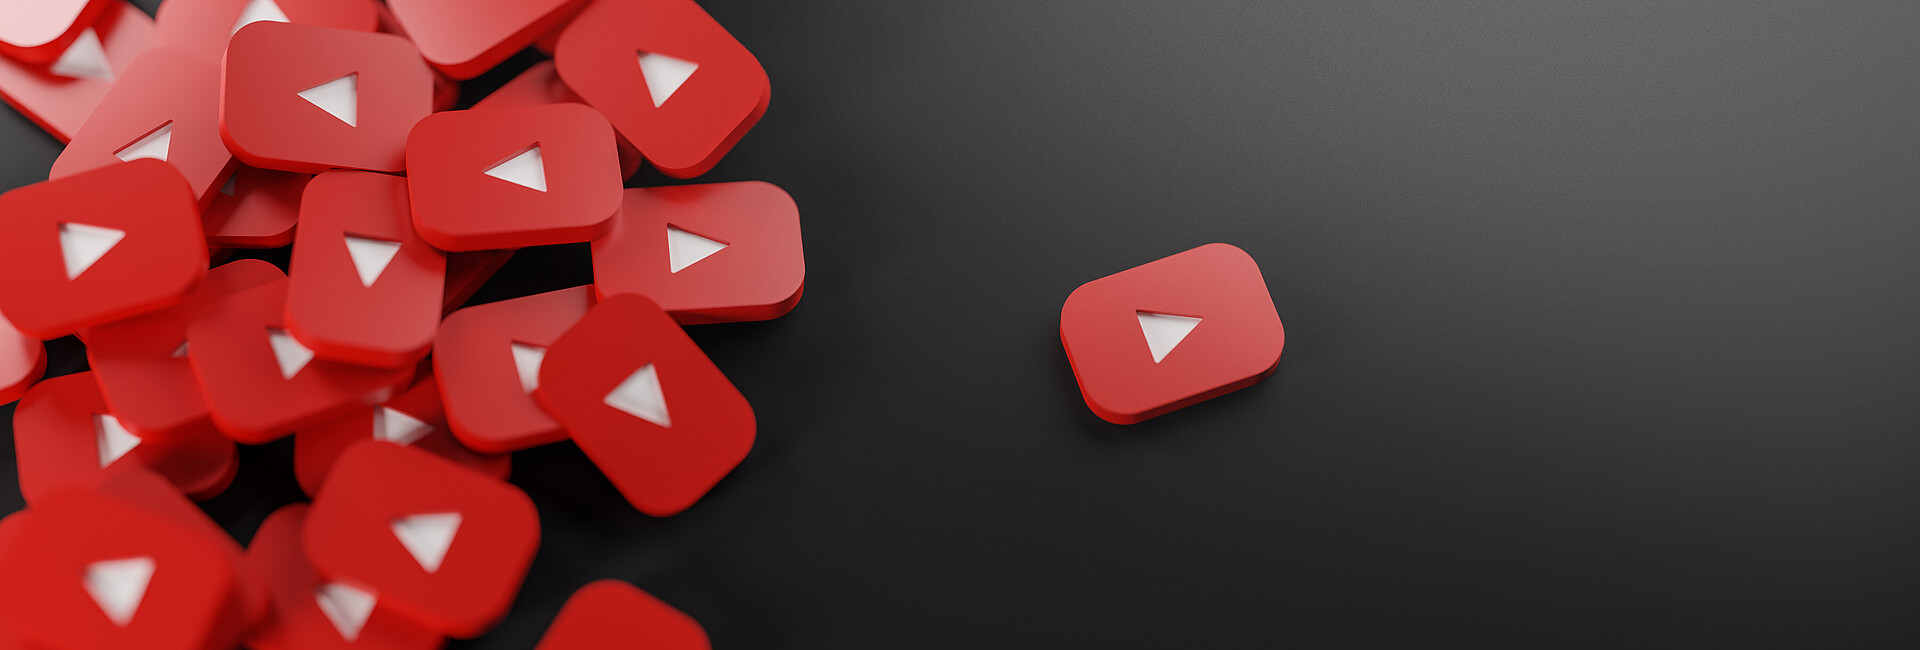 YouTube-Logos